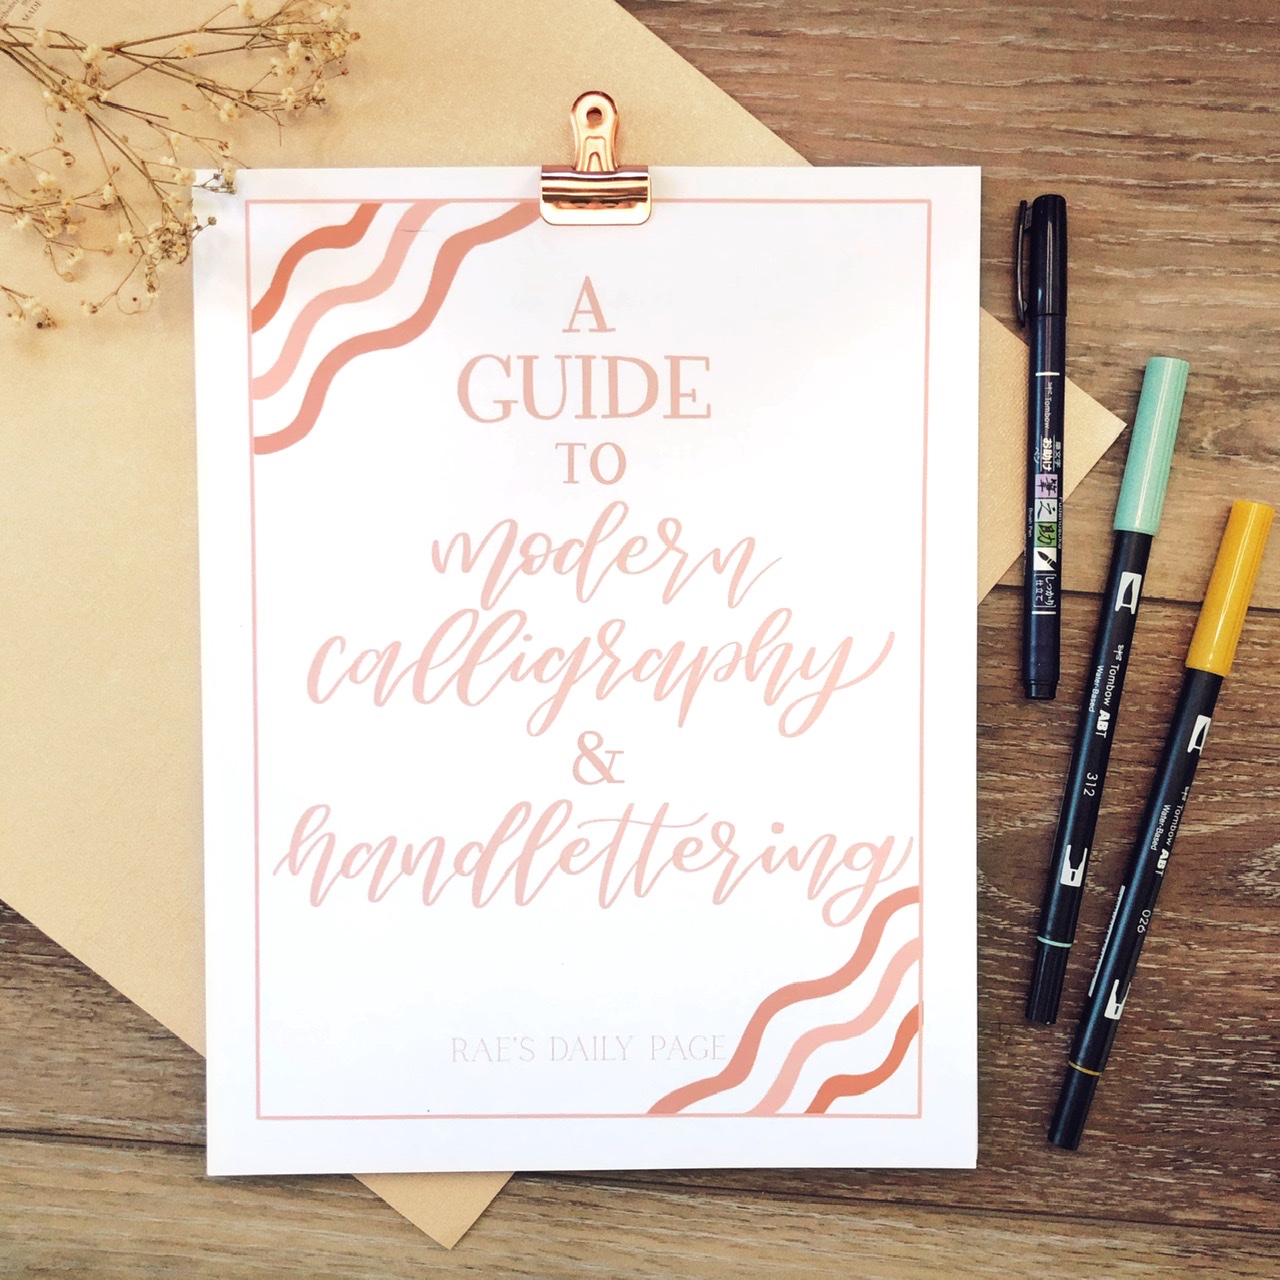 Beginners Modern Calligraphy Kit, Modern Calligraphy Kit